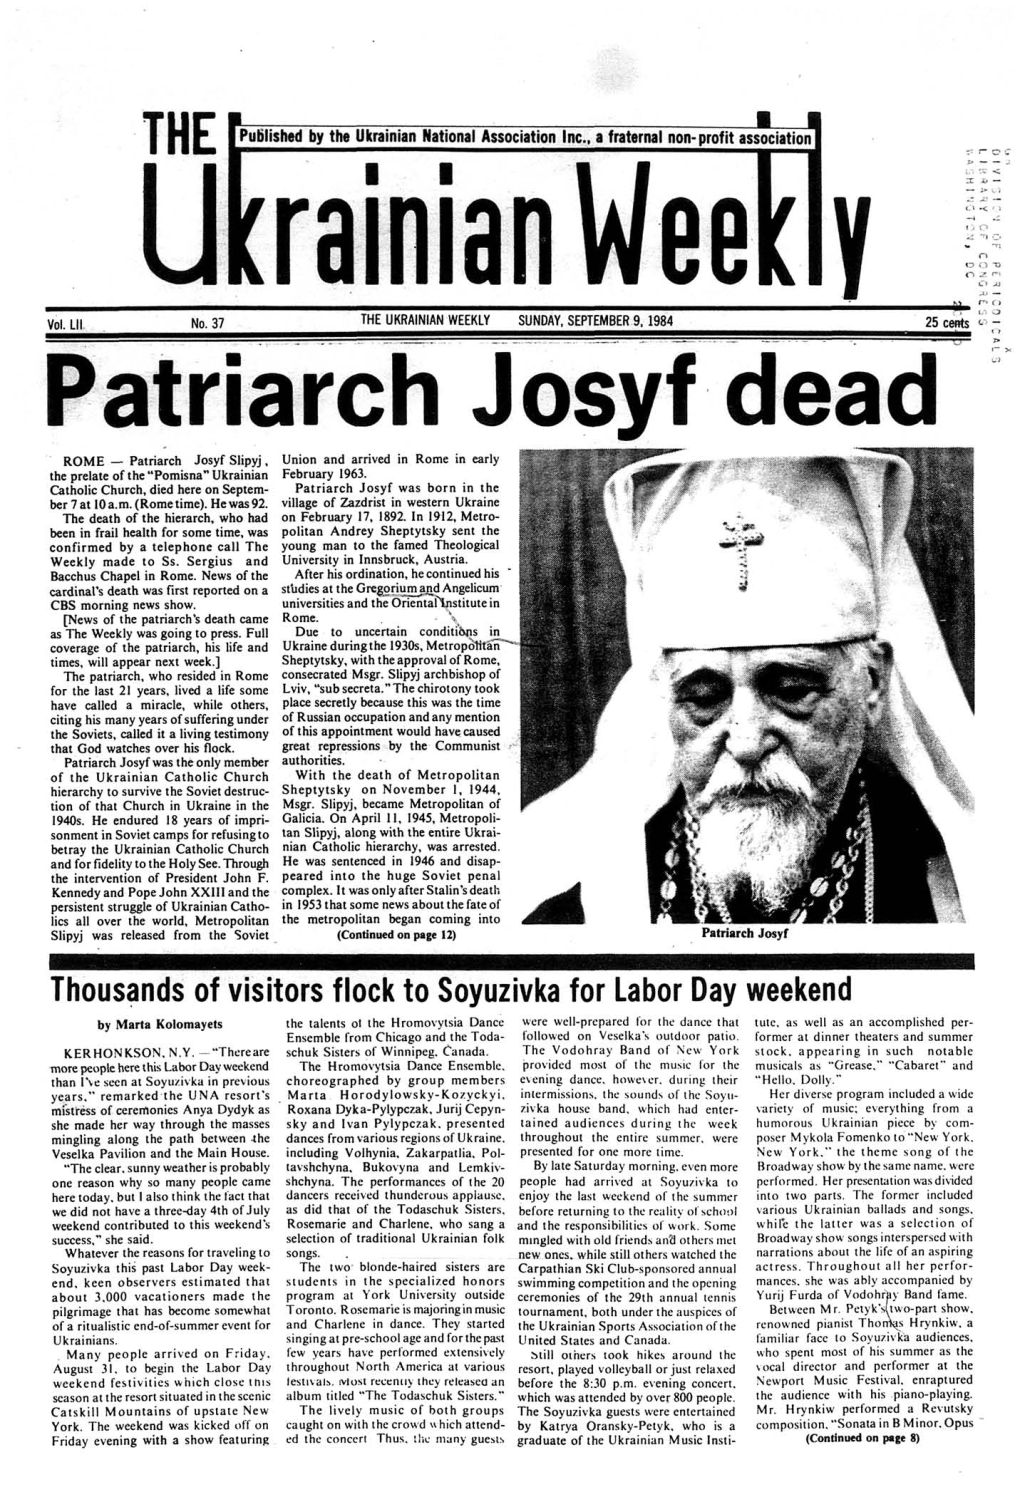 The Ukrainian Weekly 1984, No.37